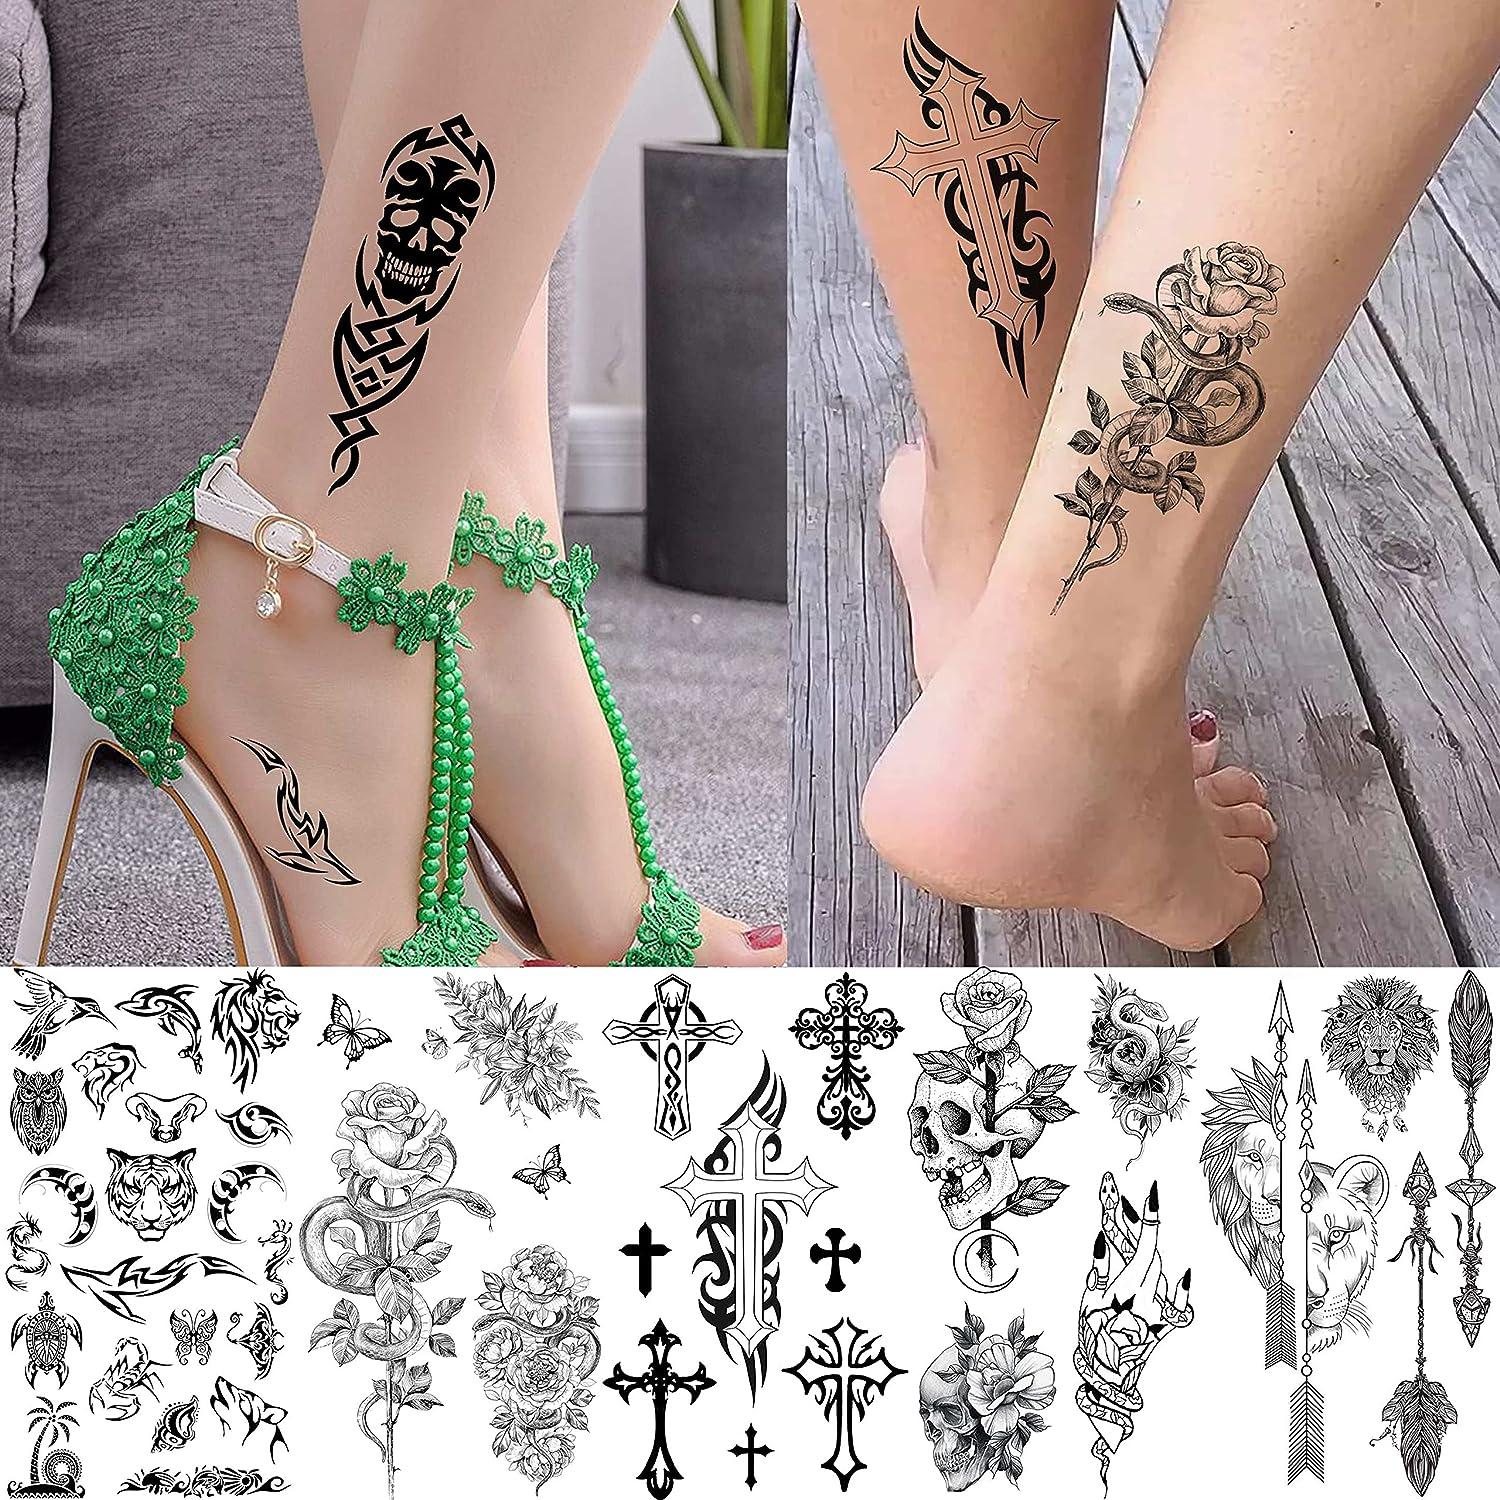 Gentle and Ladylike Foot Tattoos | hoodinked